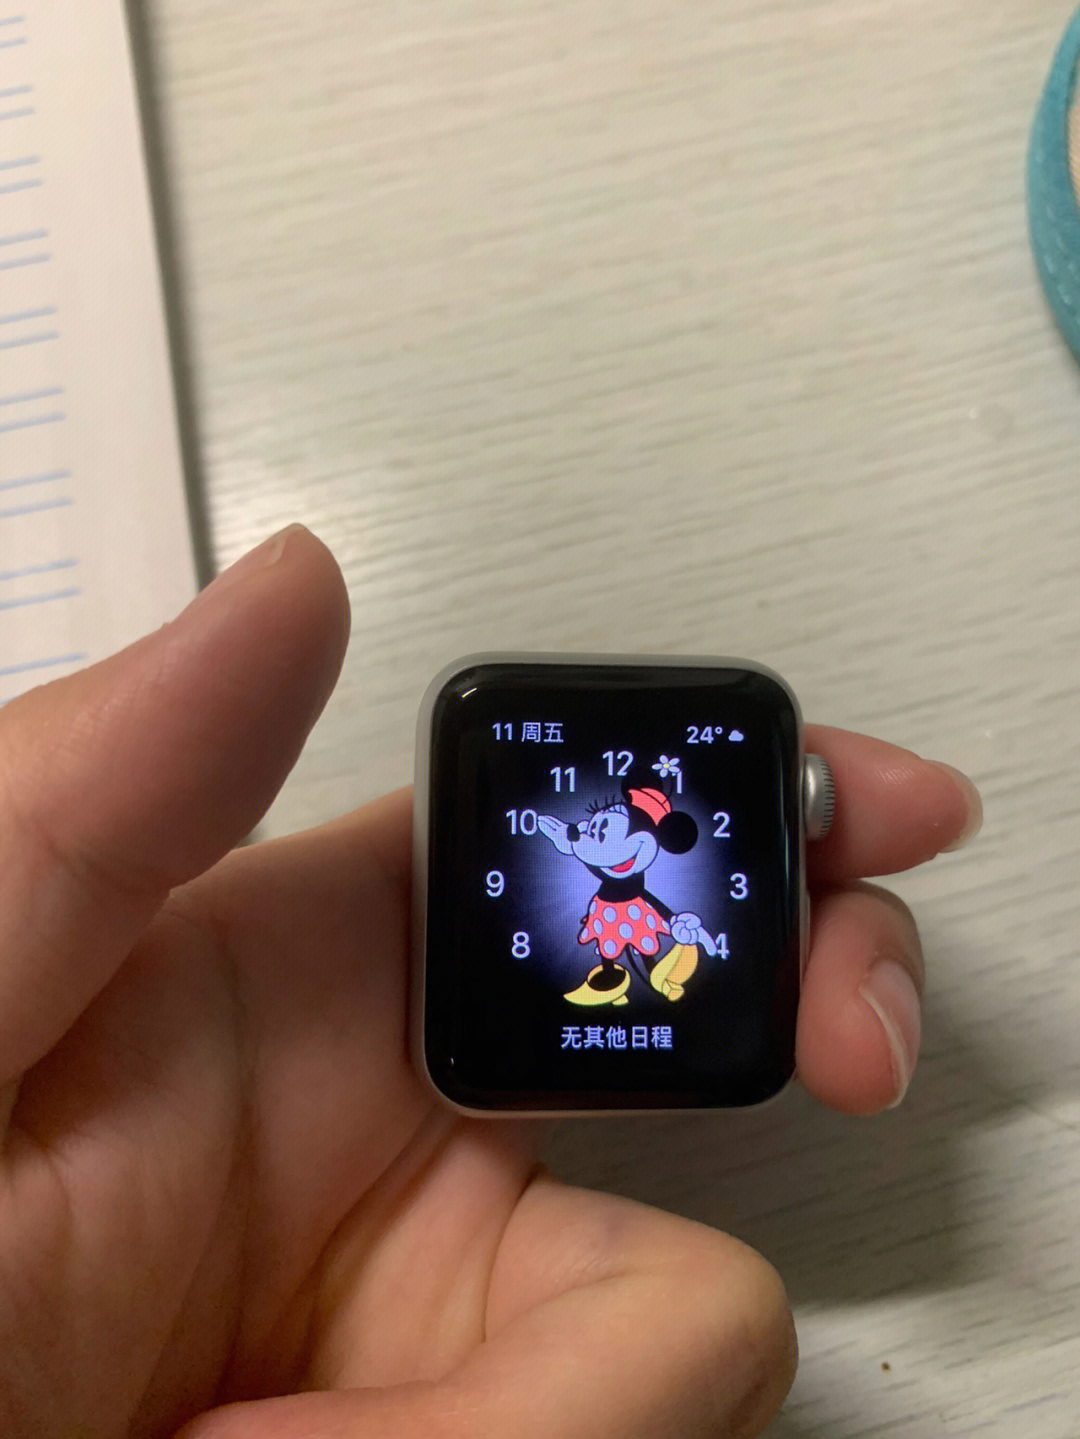 apple watch3,以前朋友过生日送的,戴了一段时间不想戴了